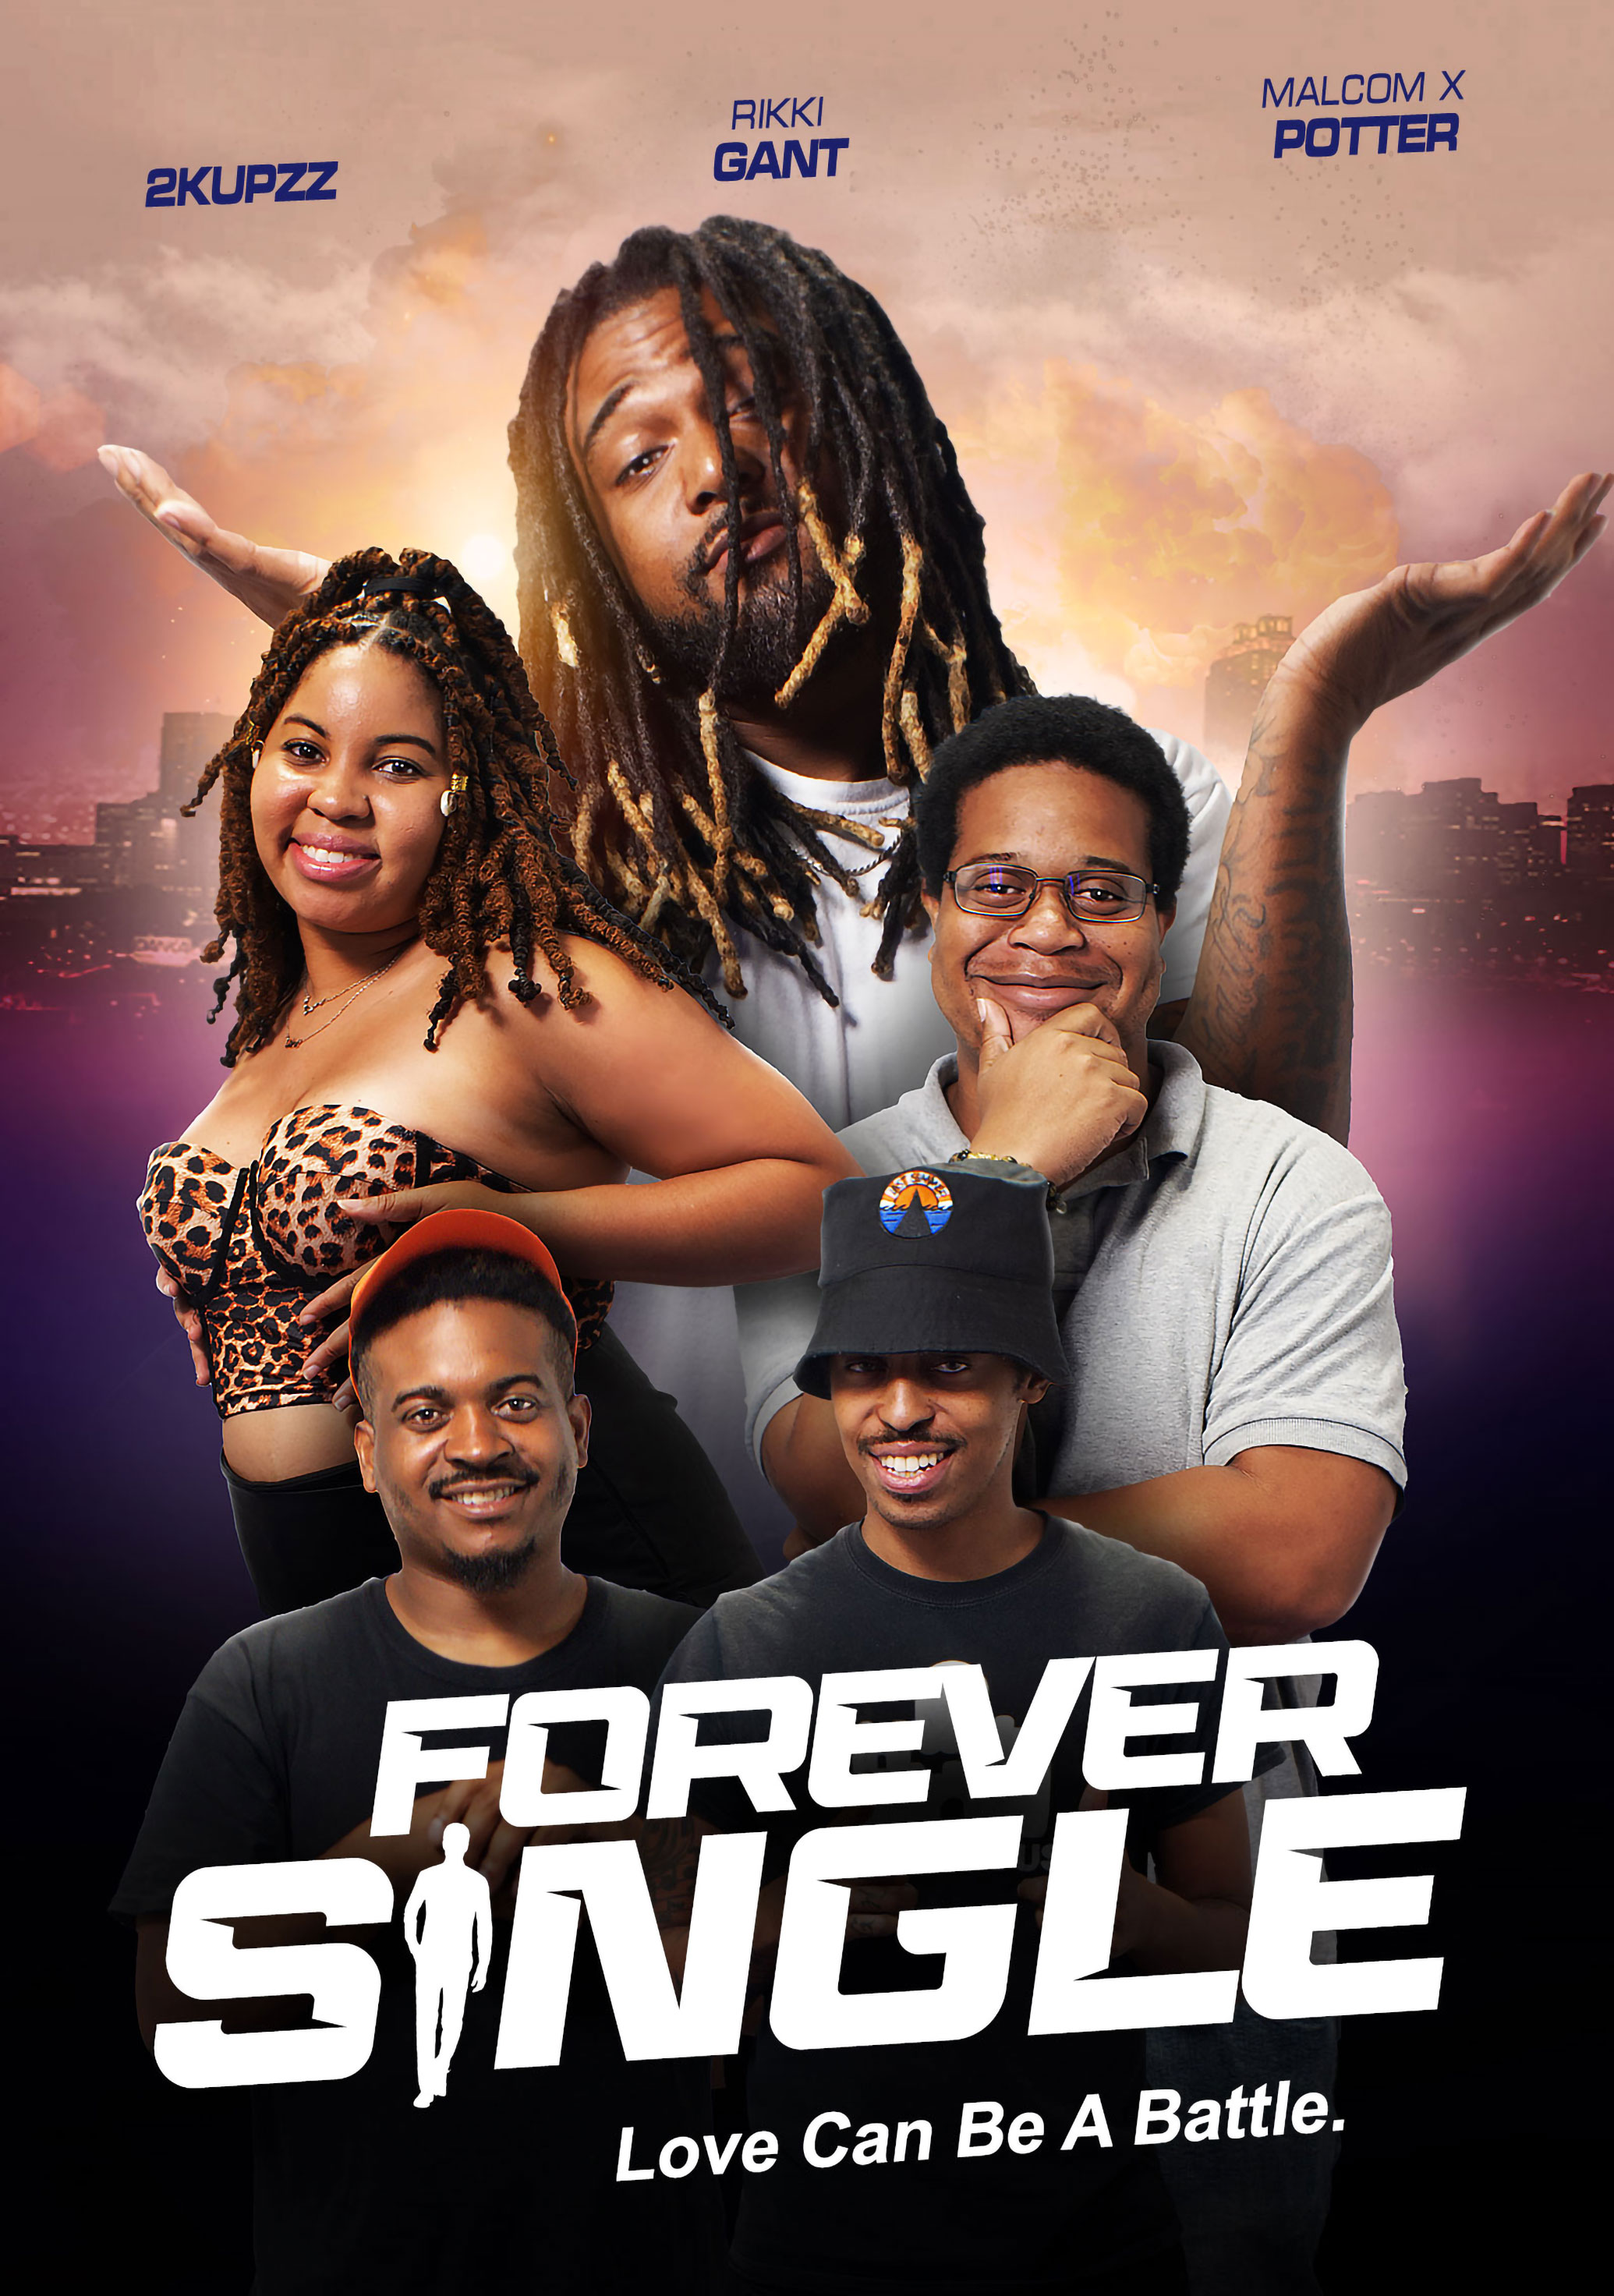 Movie Poster for Forever Single